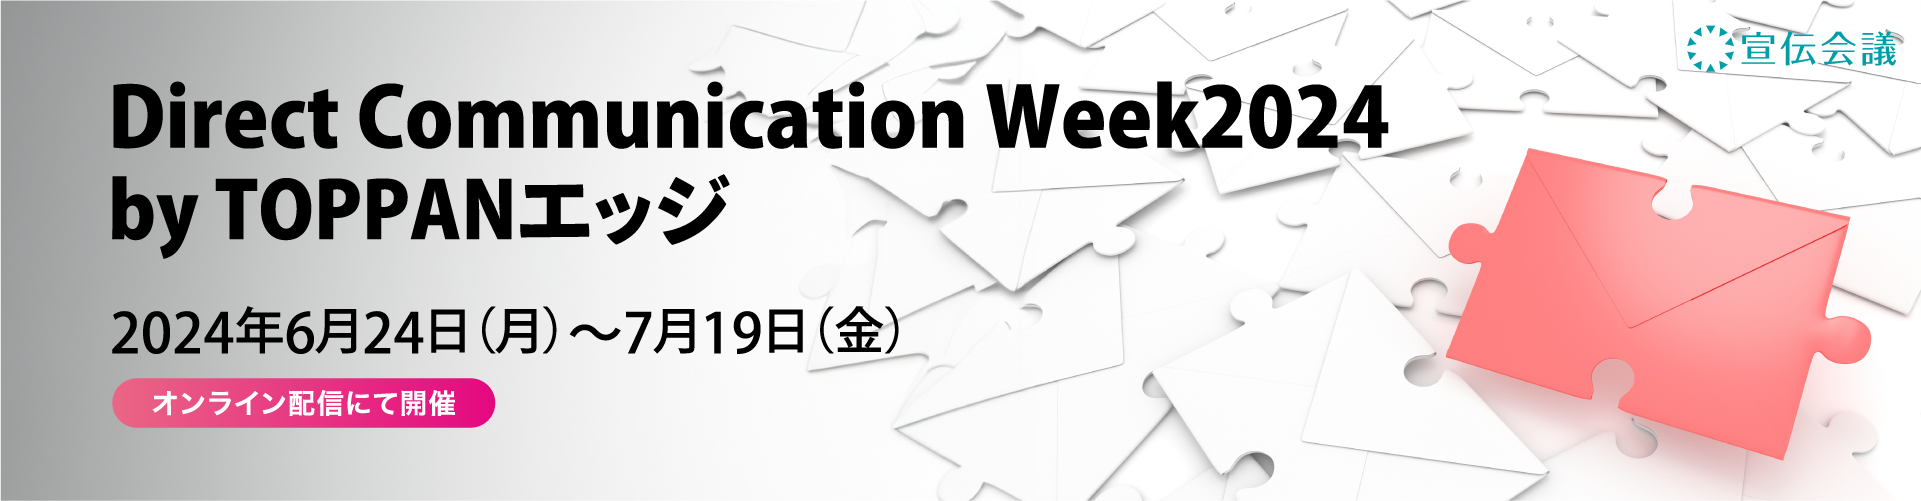 Direct Communication Week2024